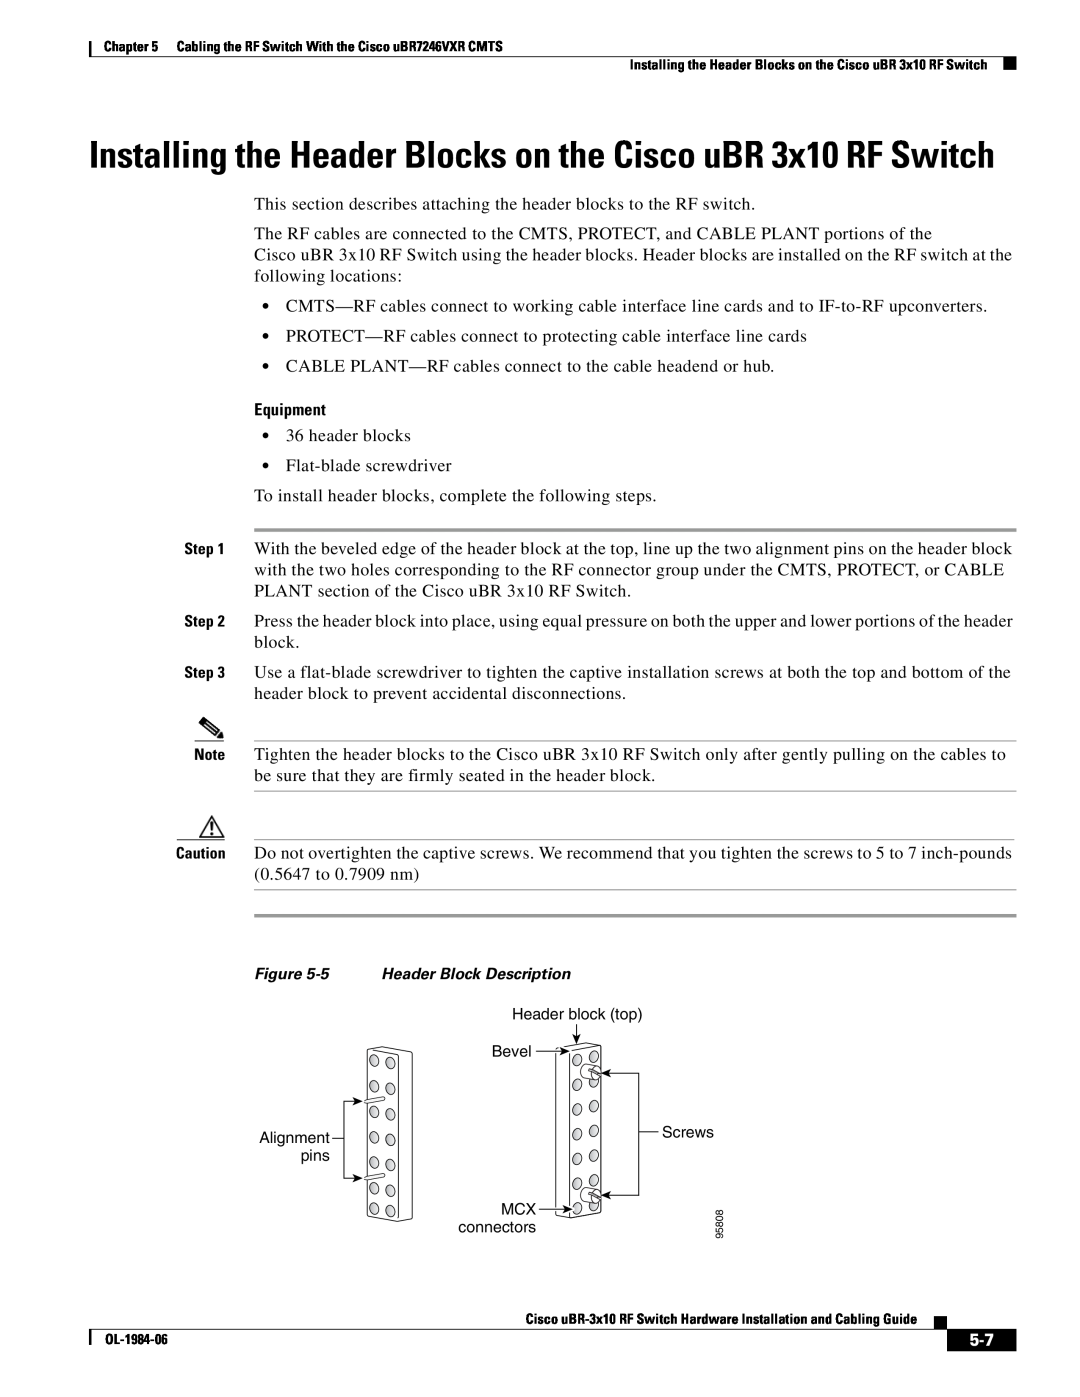 Cisco Systems UBR-3X10 manual Installing the Header Blocks on the Cisco uBR 3x10 RF Switch, Equipment 